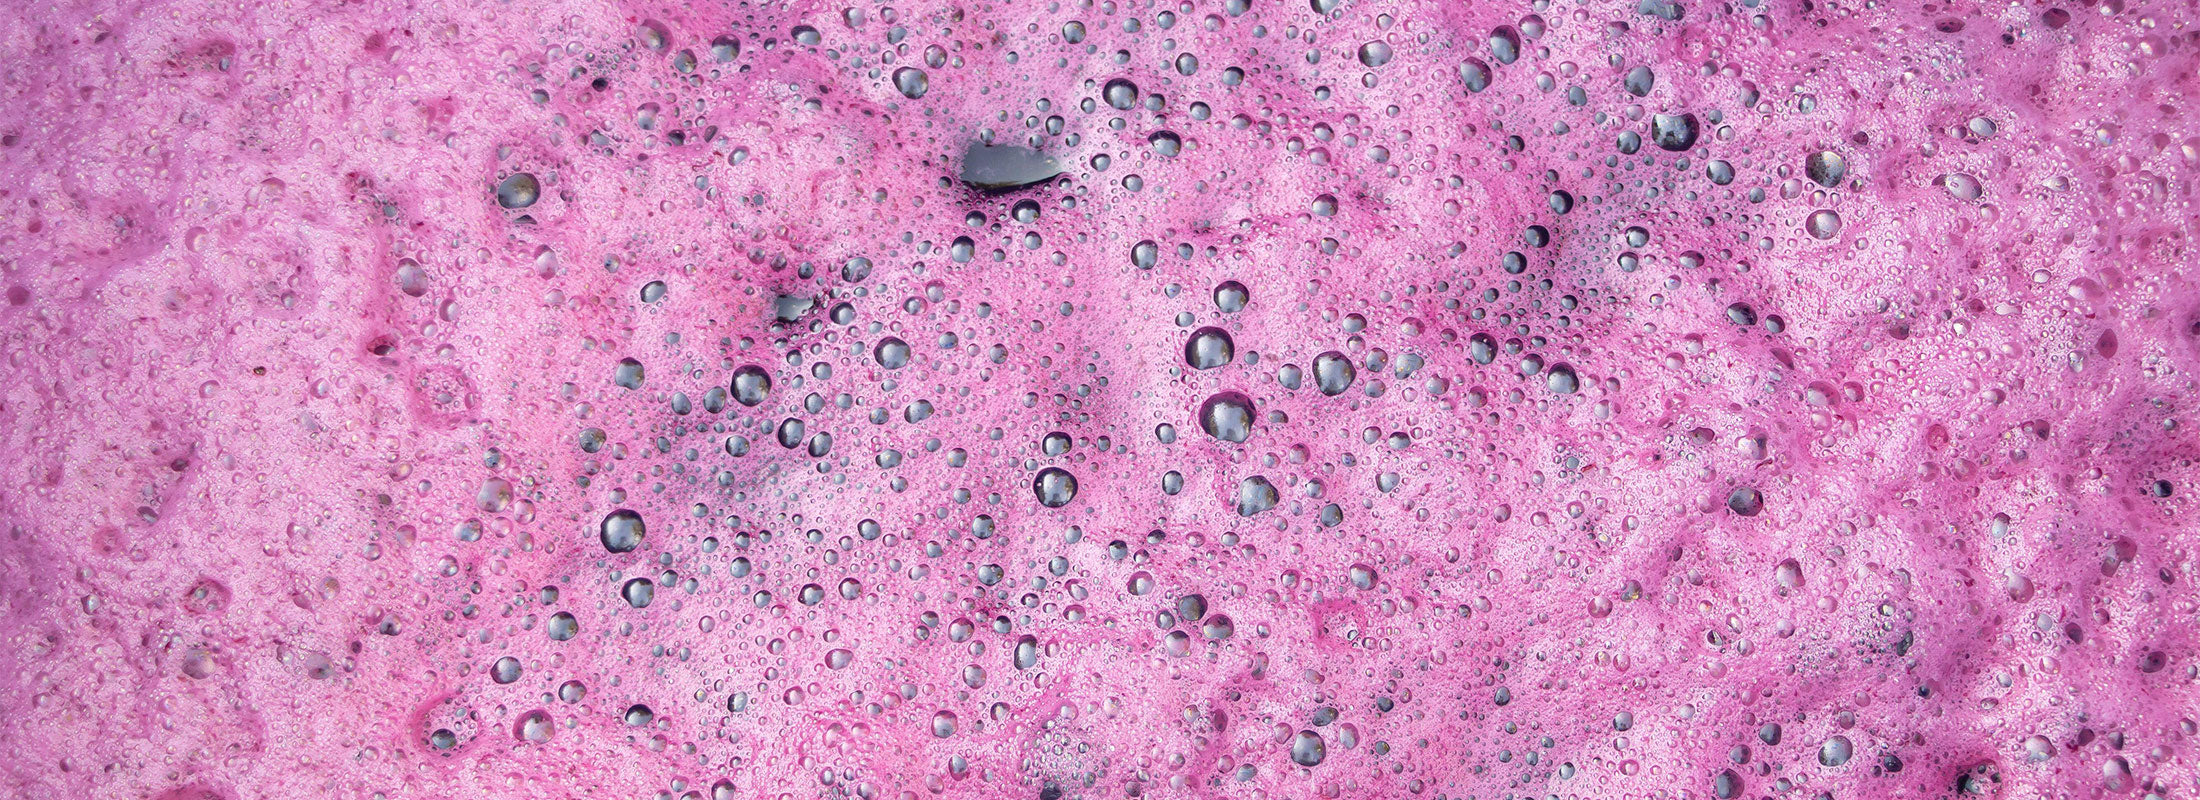 Closeup of wine in full ferment with pink foam